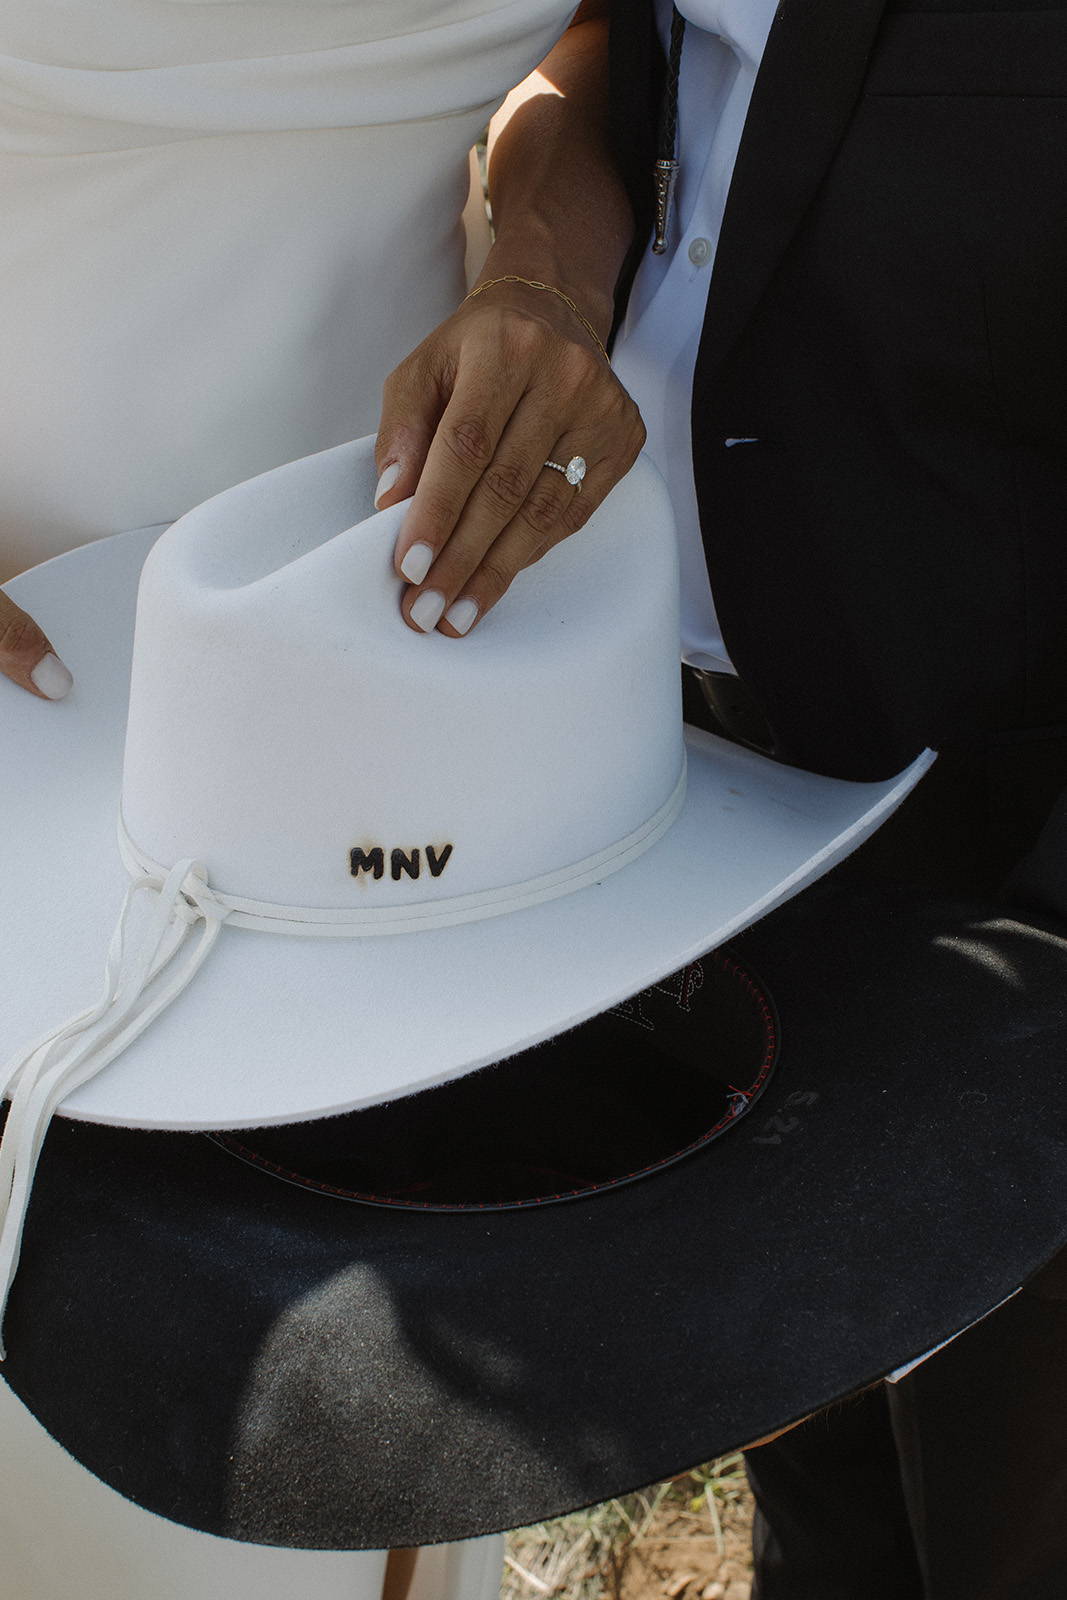 Mr and mrs cowboy hats